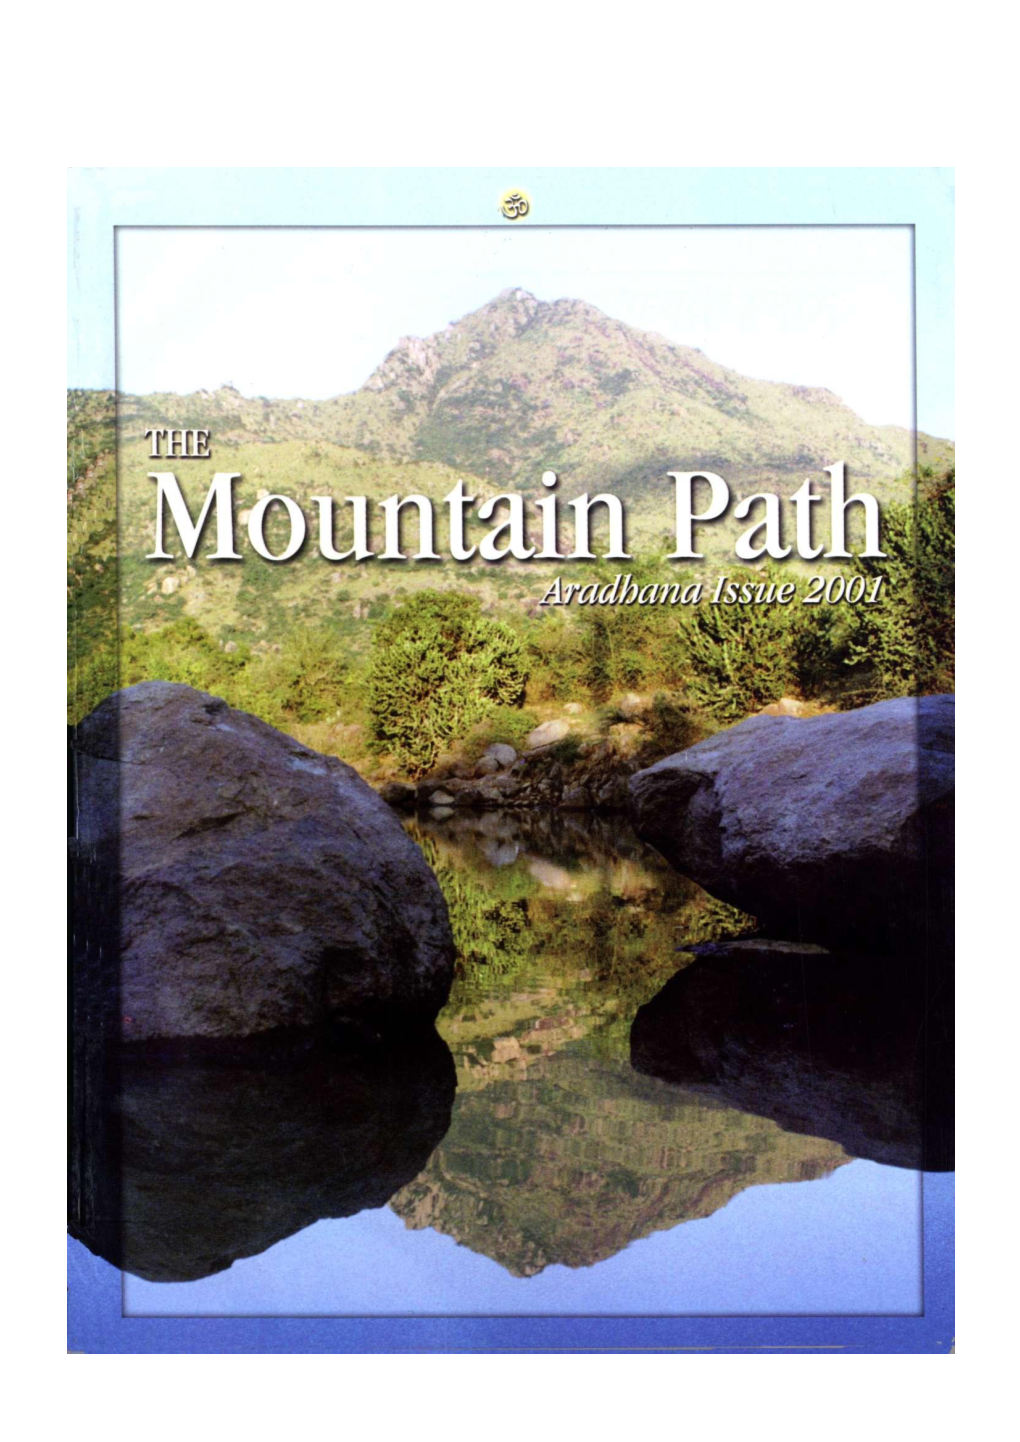 The Mountain Path Vol. 38 No. 1‑2, Aradhana 2001